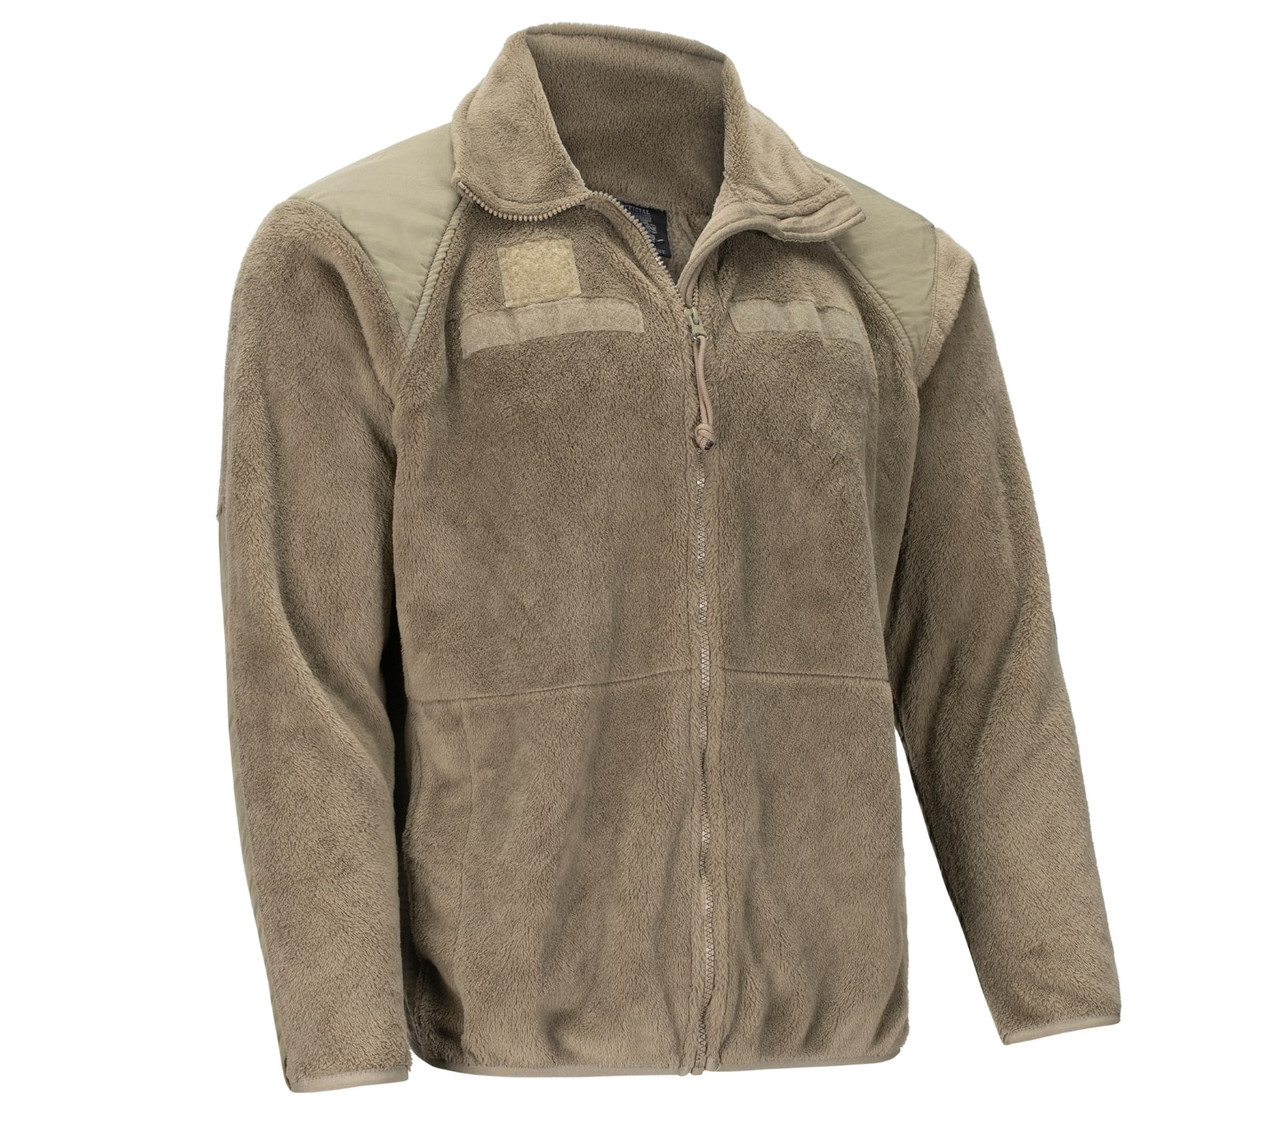 Army Issue Coyote Tan PolarTec fleece Jacket | Military Surplus Used